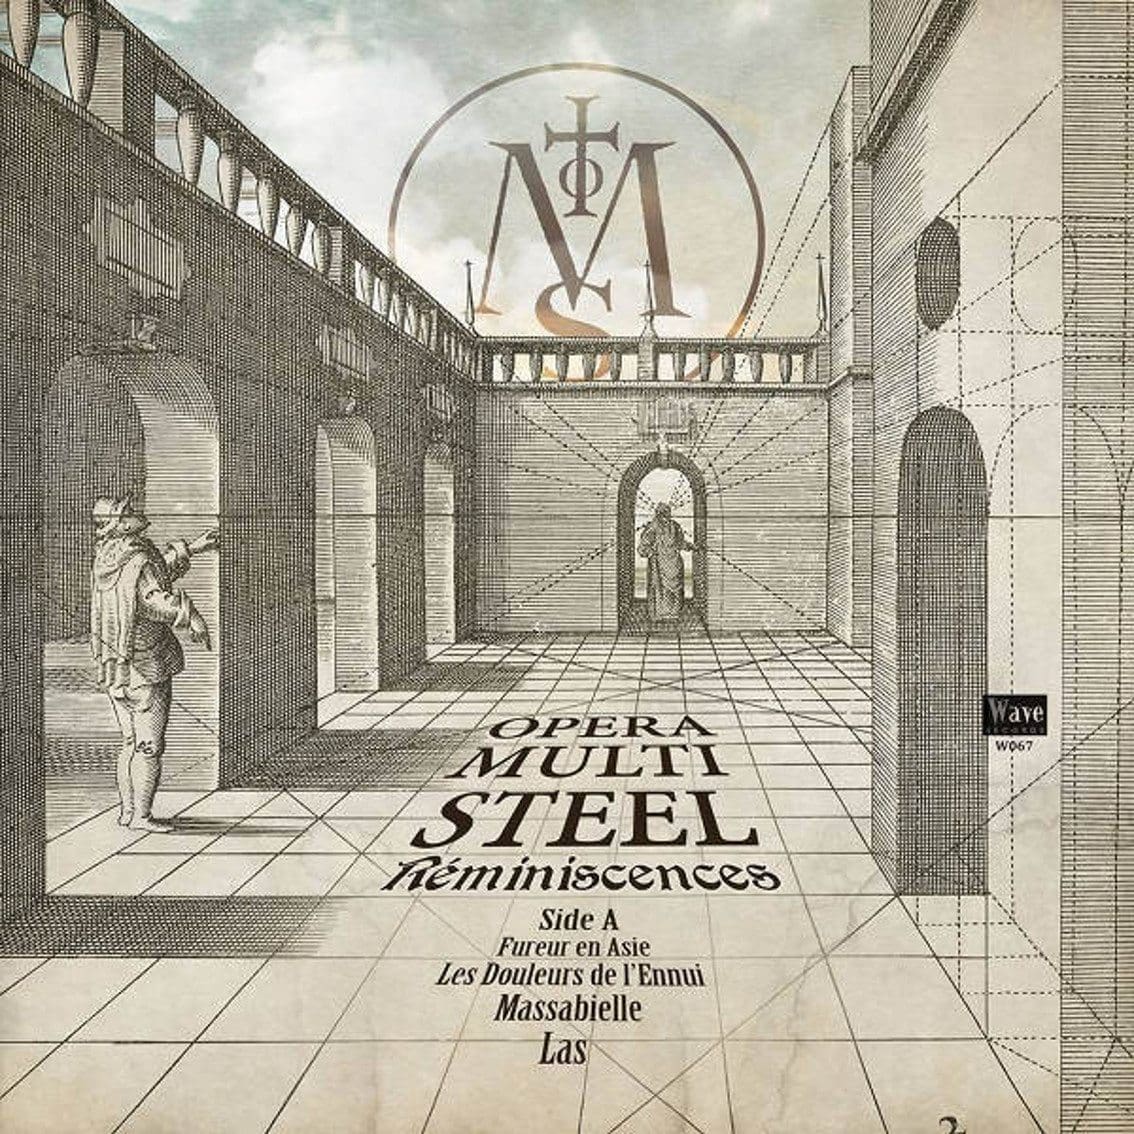 Opera Multi Steel plans picture vinyl in December, 'Réminiscences', feat. revisited classics